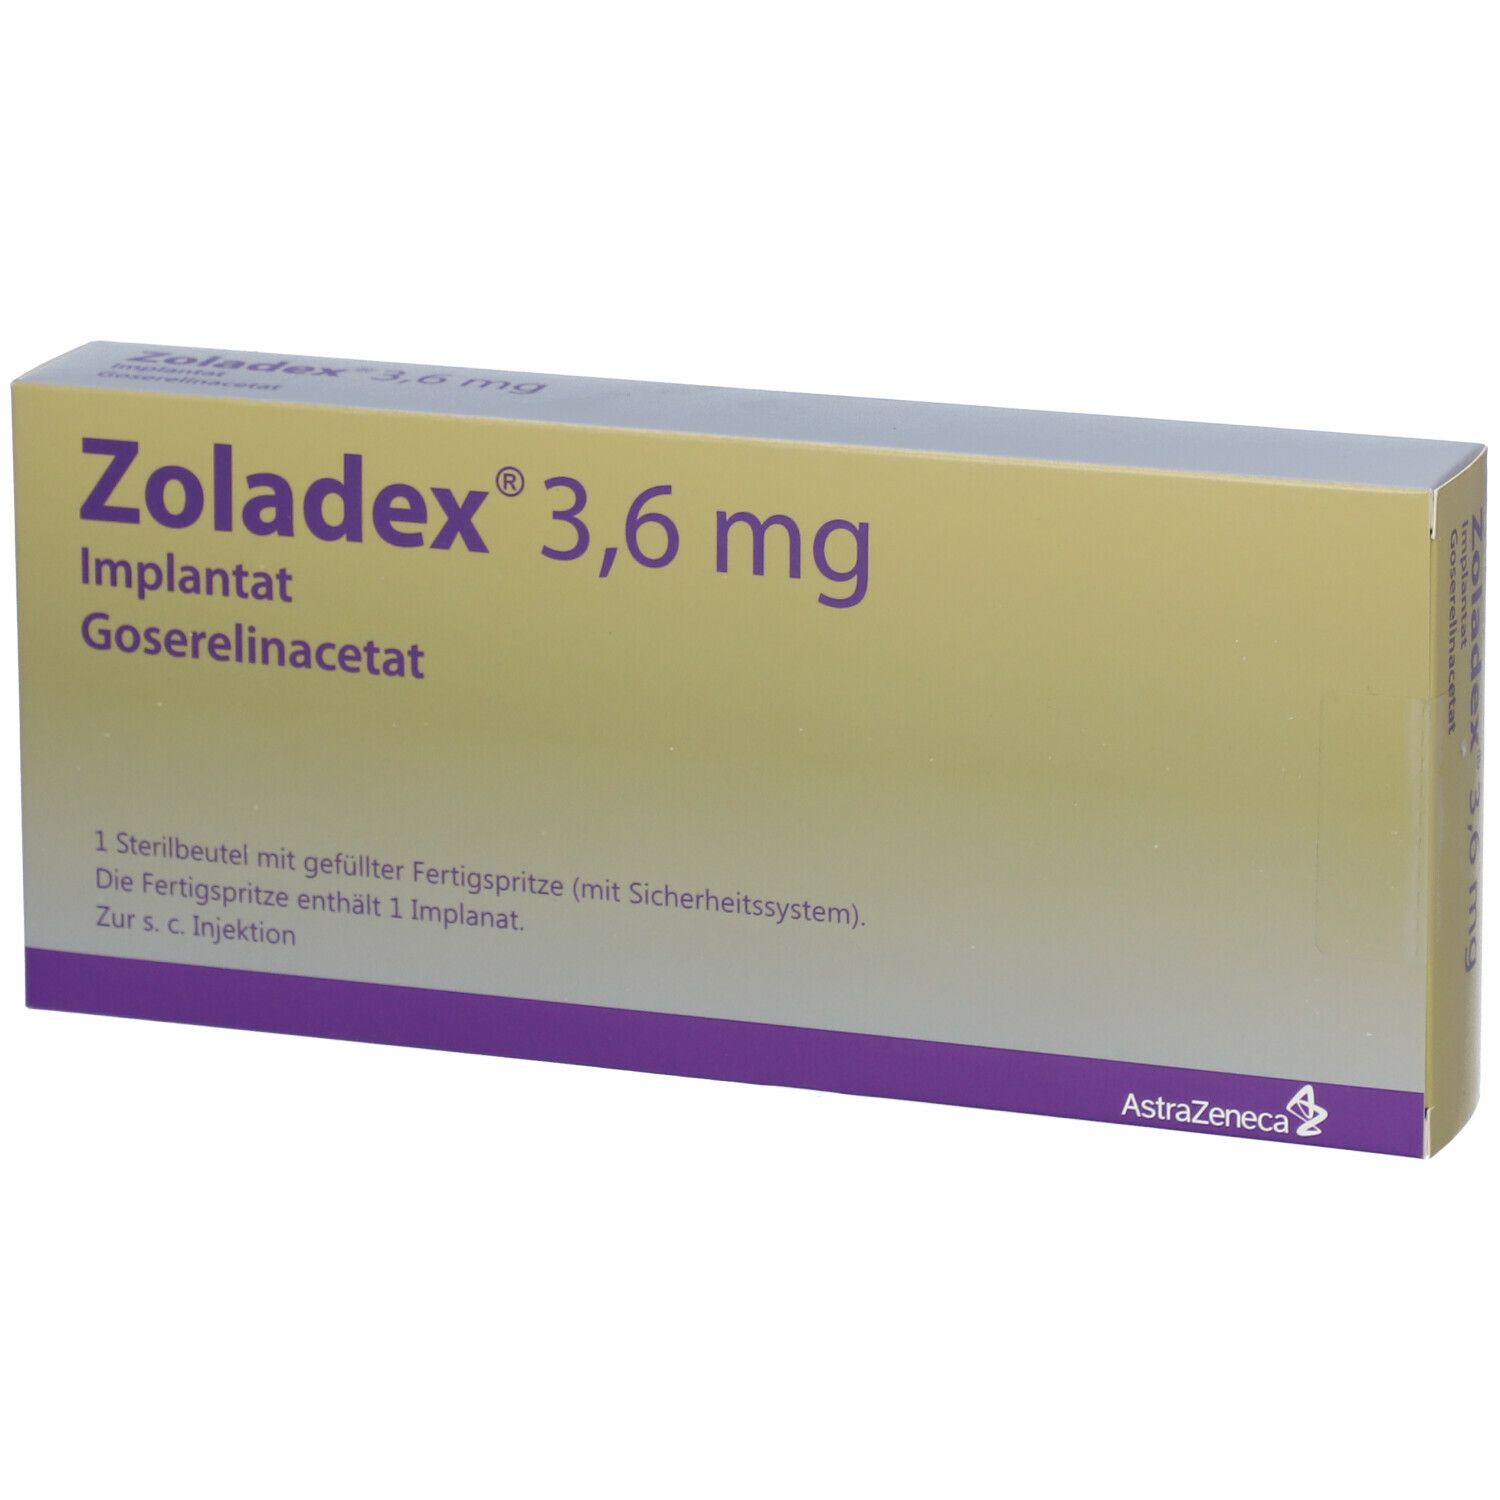 Zoladex 3,6 mg